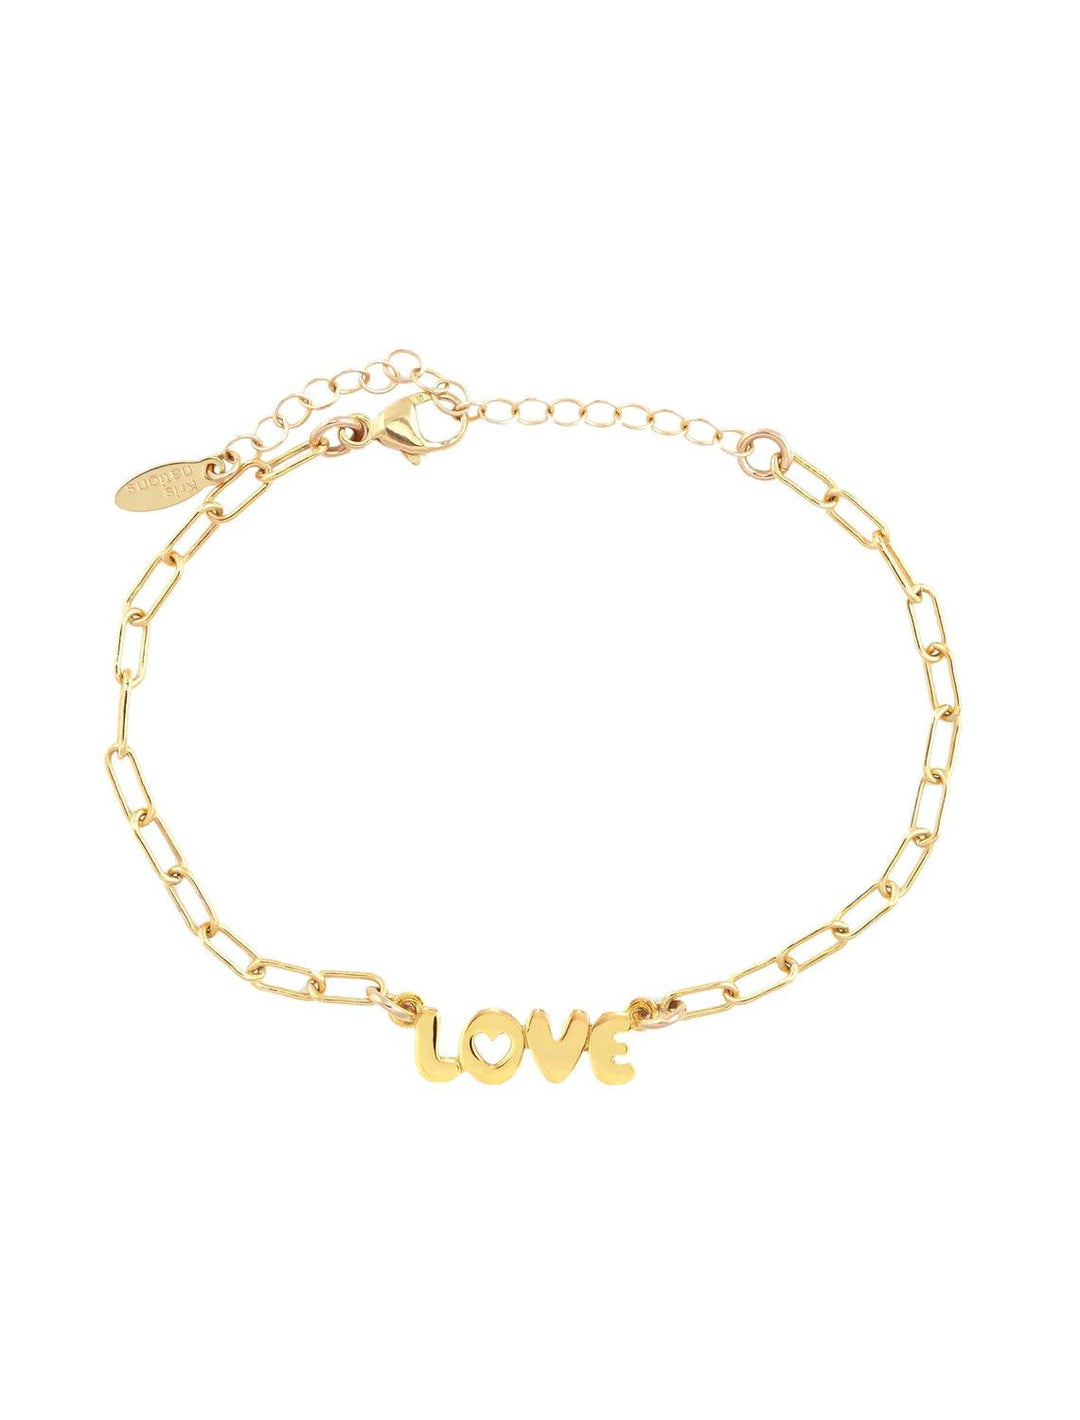 Kris Nations love bubble charm bracelet in gold - Twigs